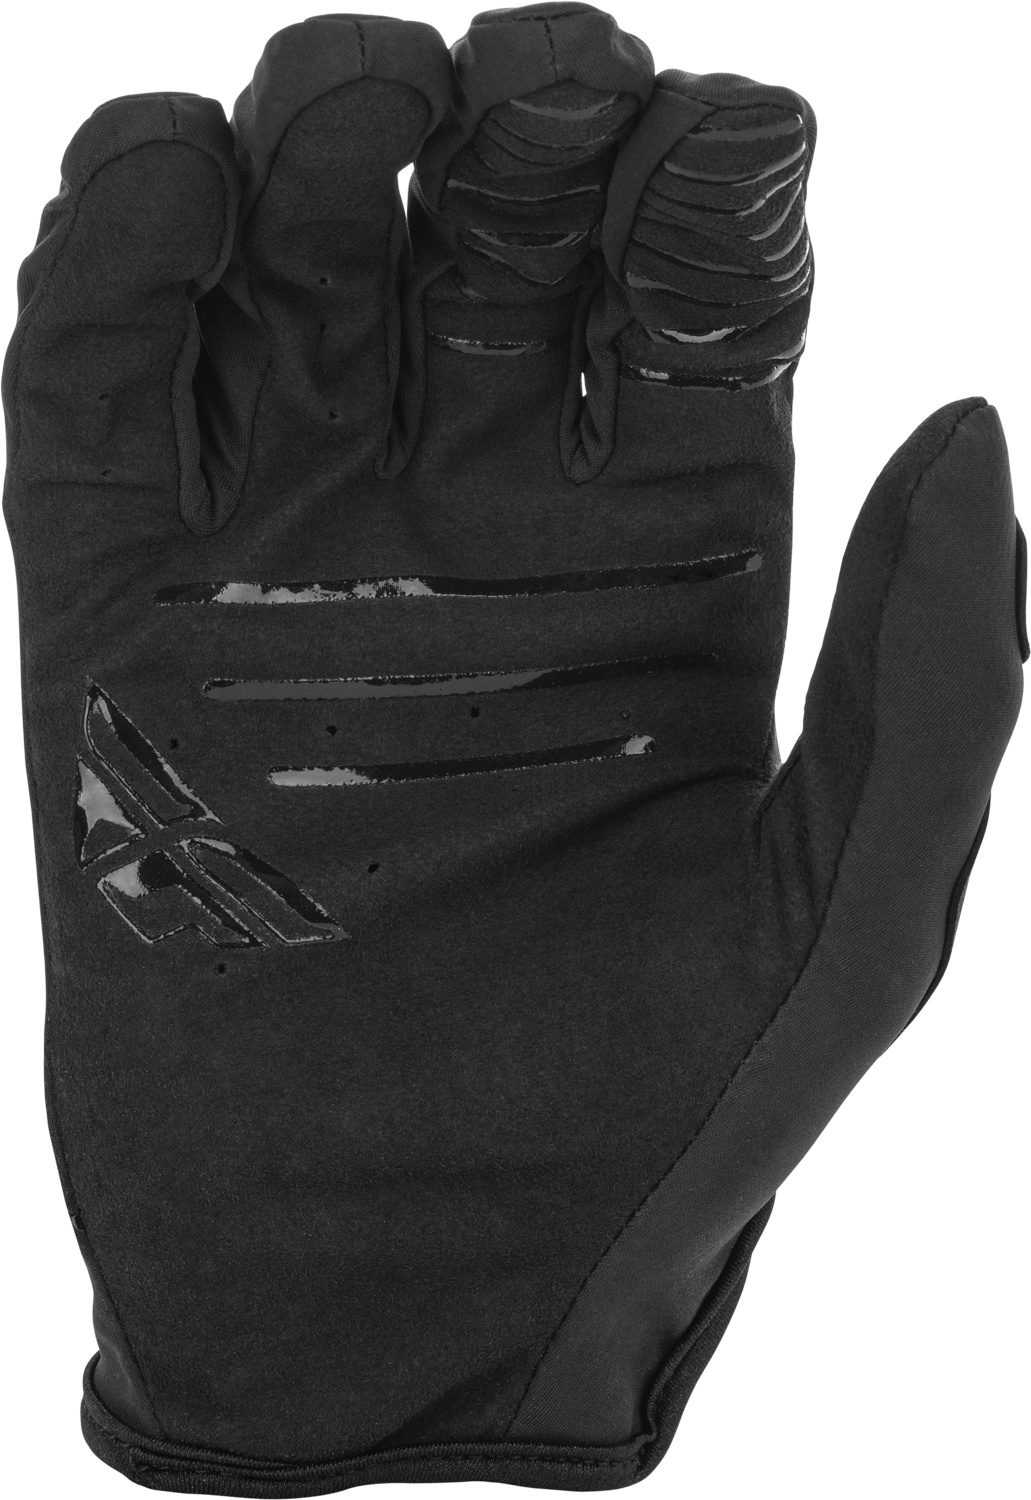 Racing Gloves – Blown Motor by Moto United